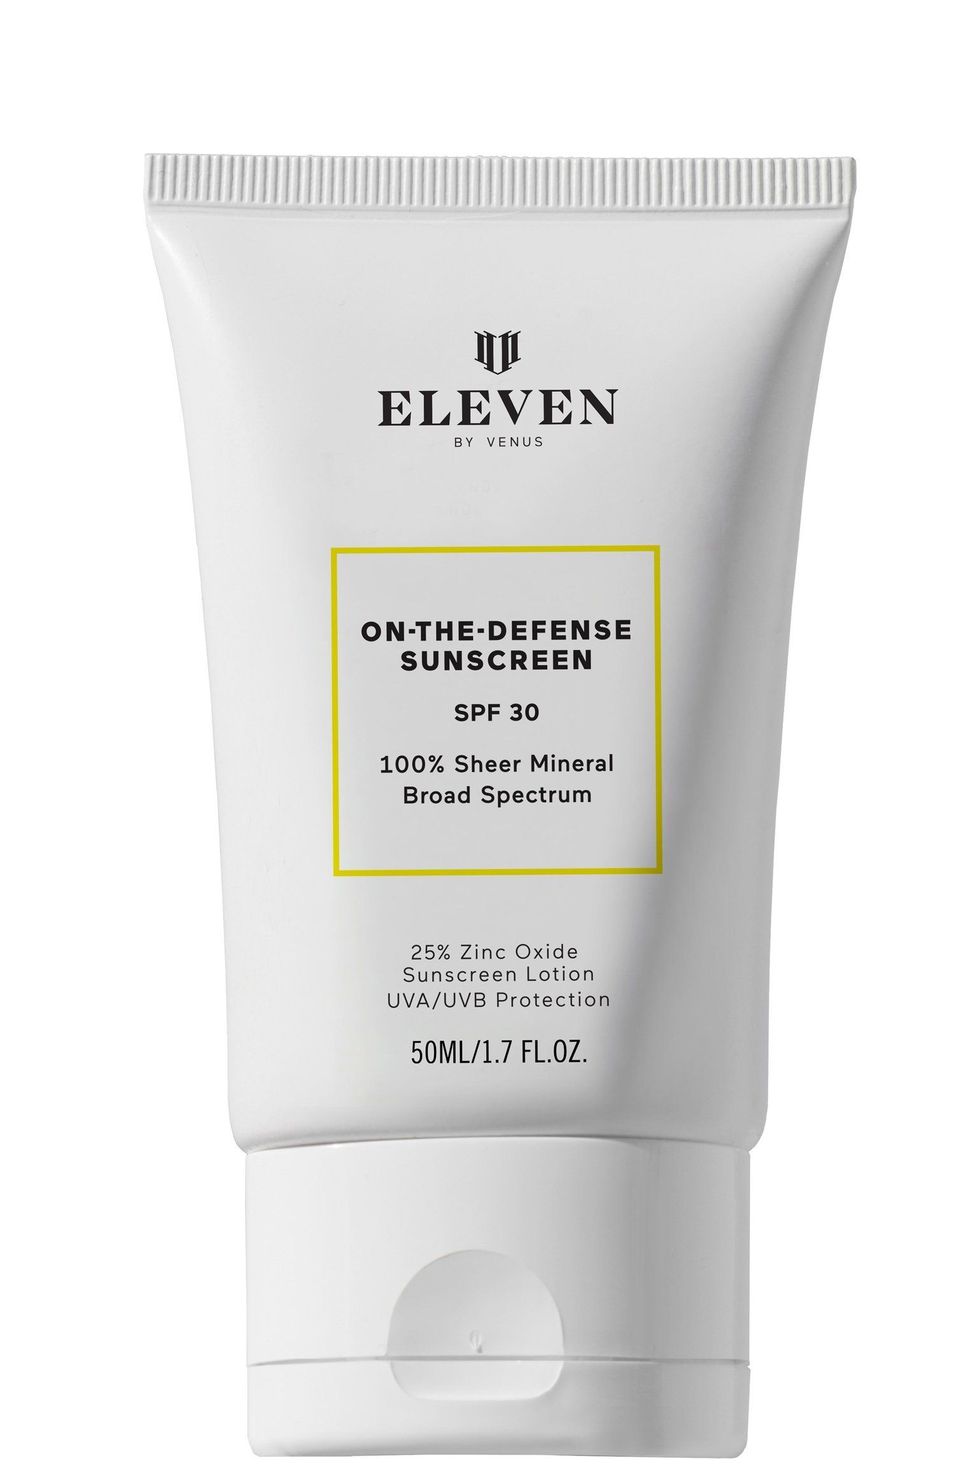 Eleven by Venus On-The-Defense Sunscreen SPF 30